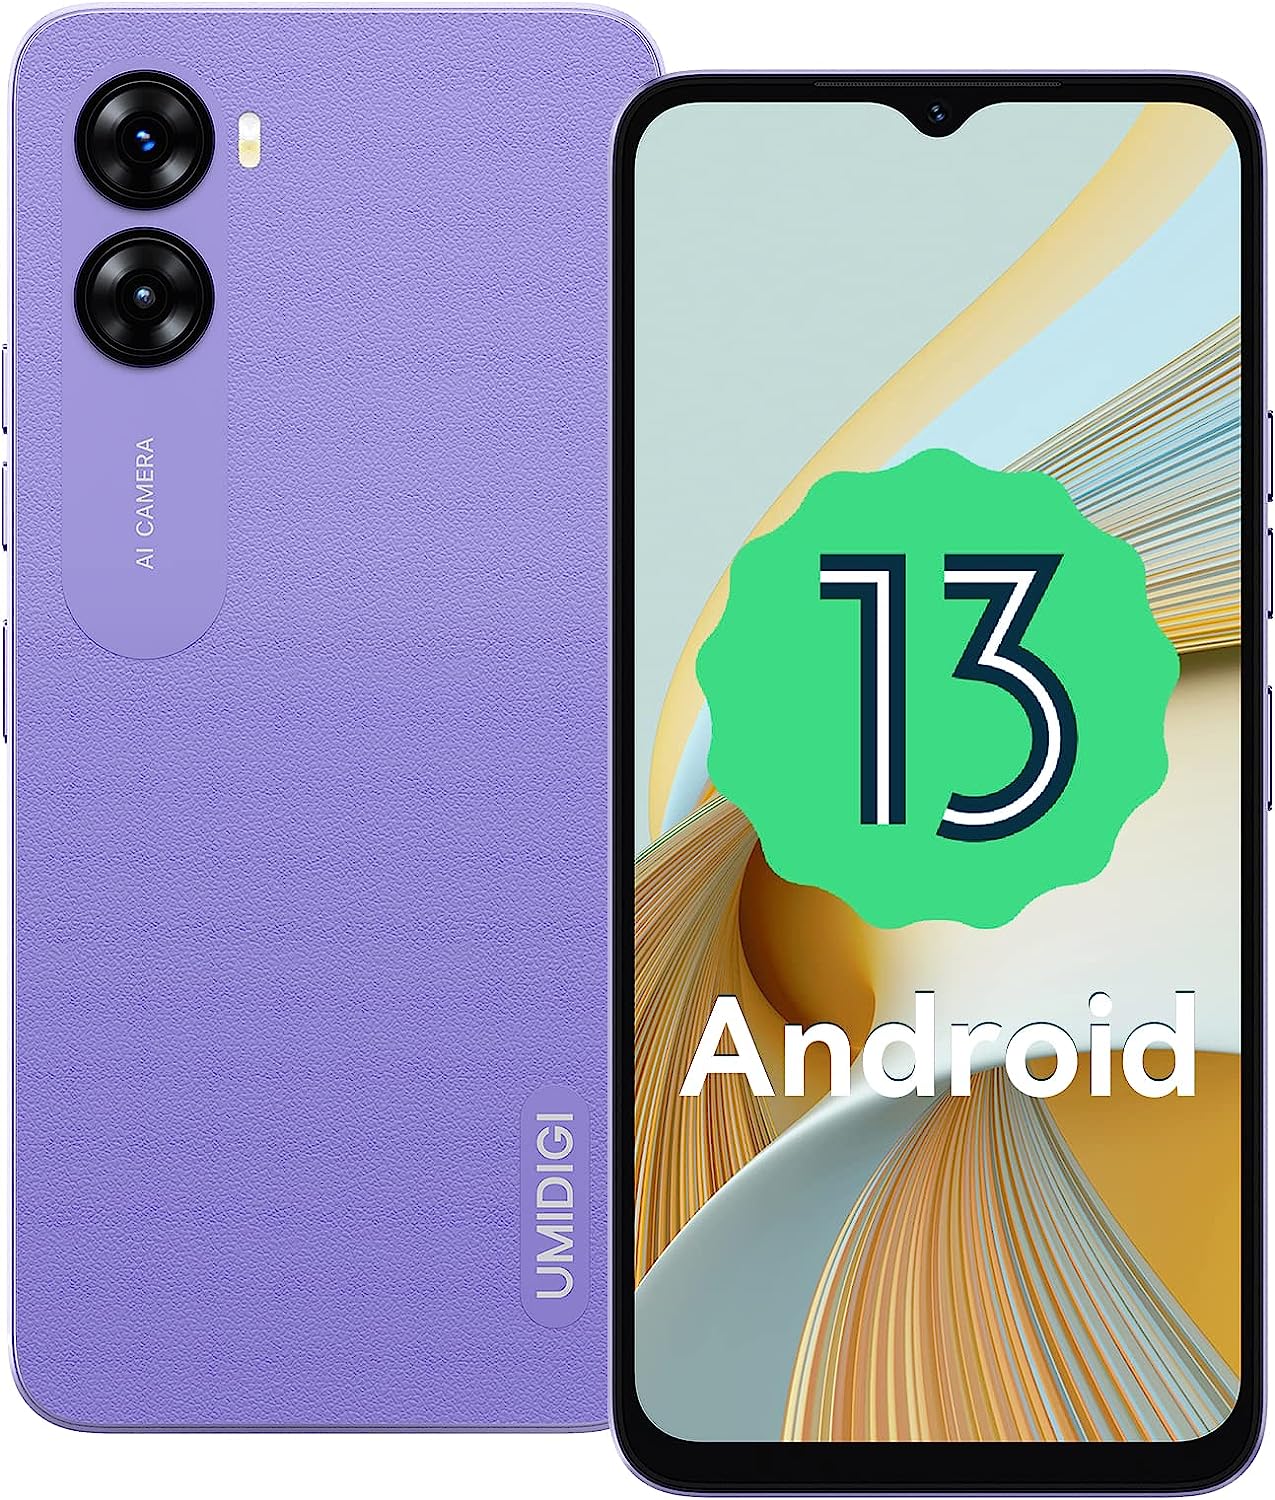 UMIDIGI Unlocked Smartphones G3, Android 13 Unlocked Smartphone, Dual Sim 4G LTE Mobile Phone, 4/64GB(1TBG Expandable), 6.52